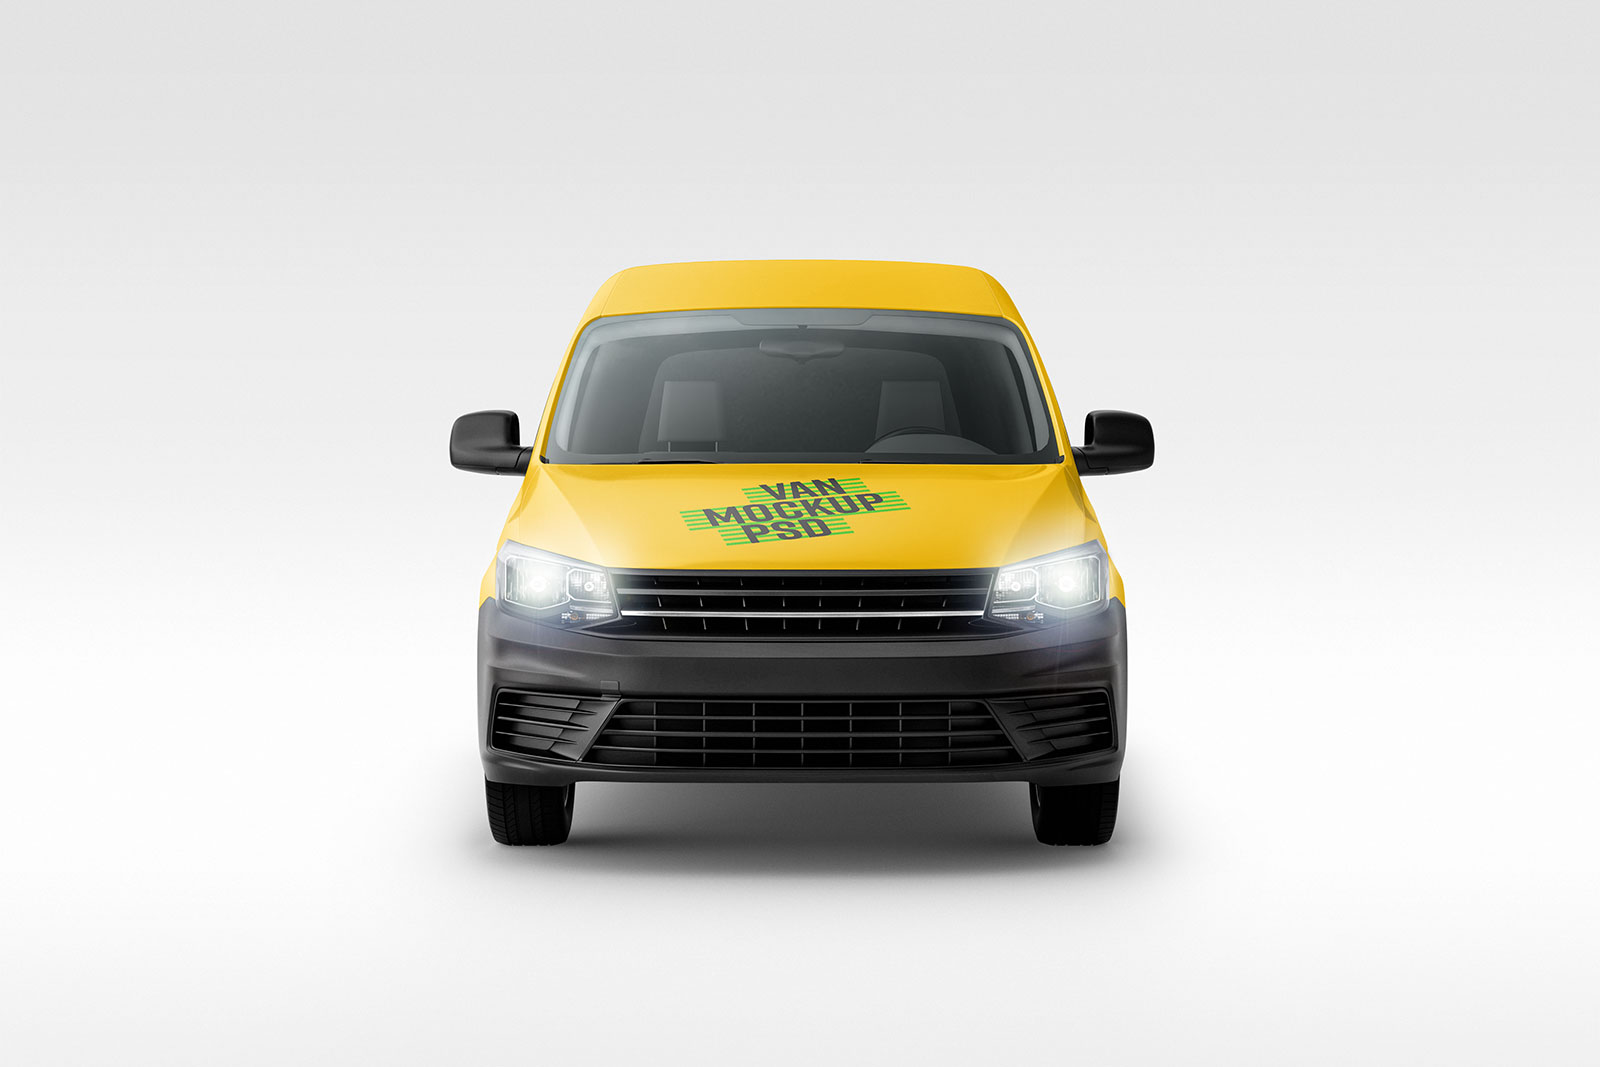 Free Panel Caddy Van Vehicle Branding Mockup PSD